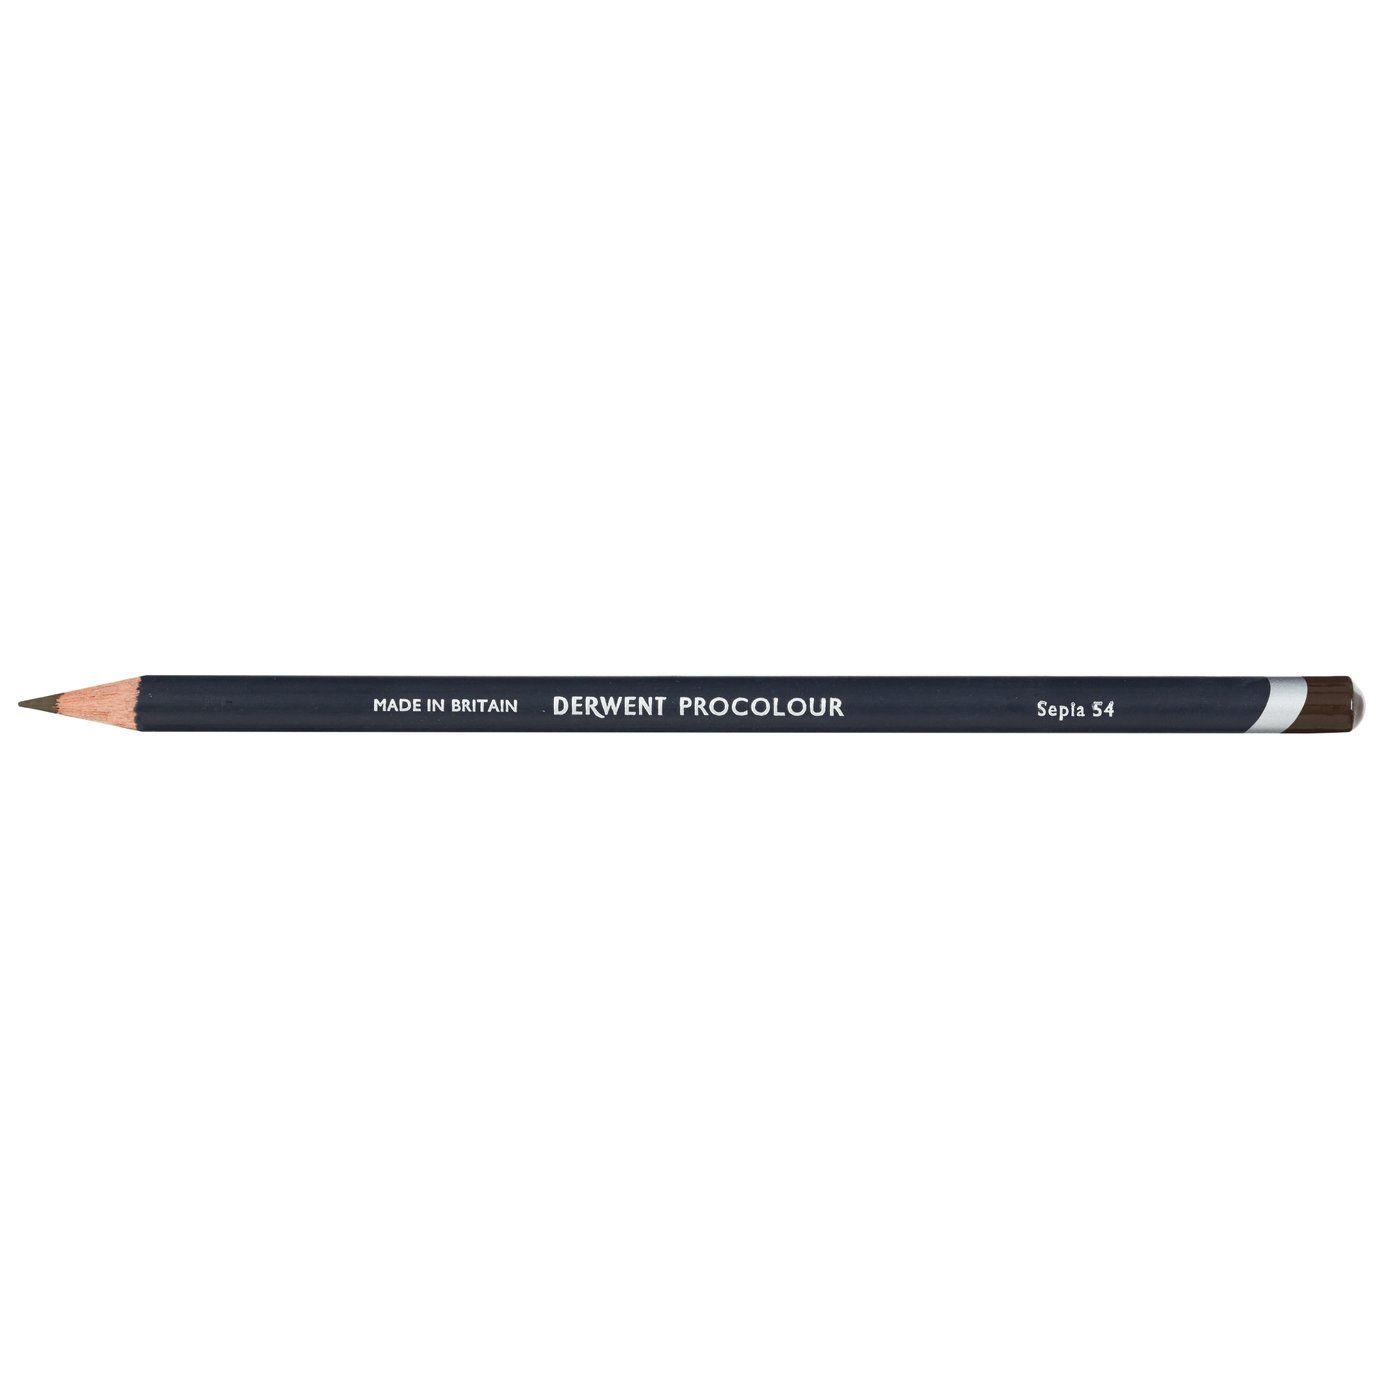 Derwent Procolour Pencil - 54 Sepia